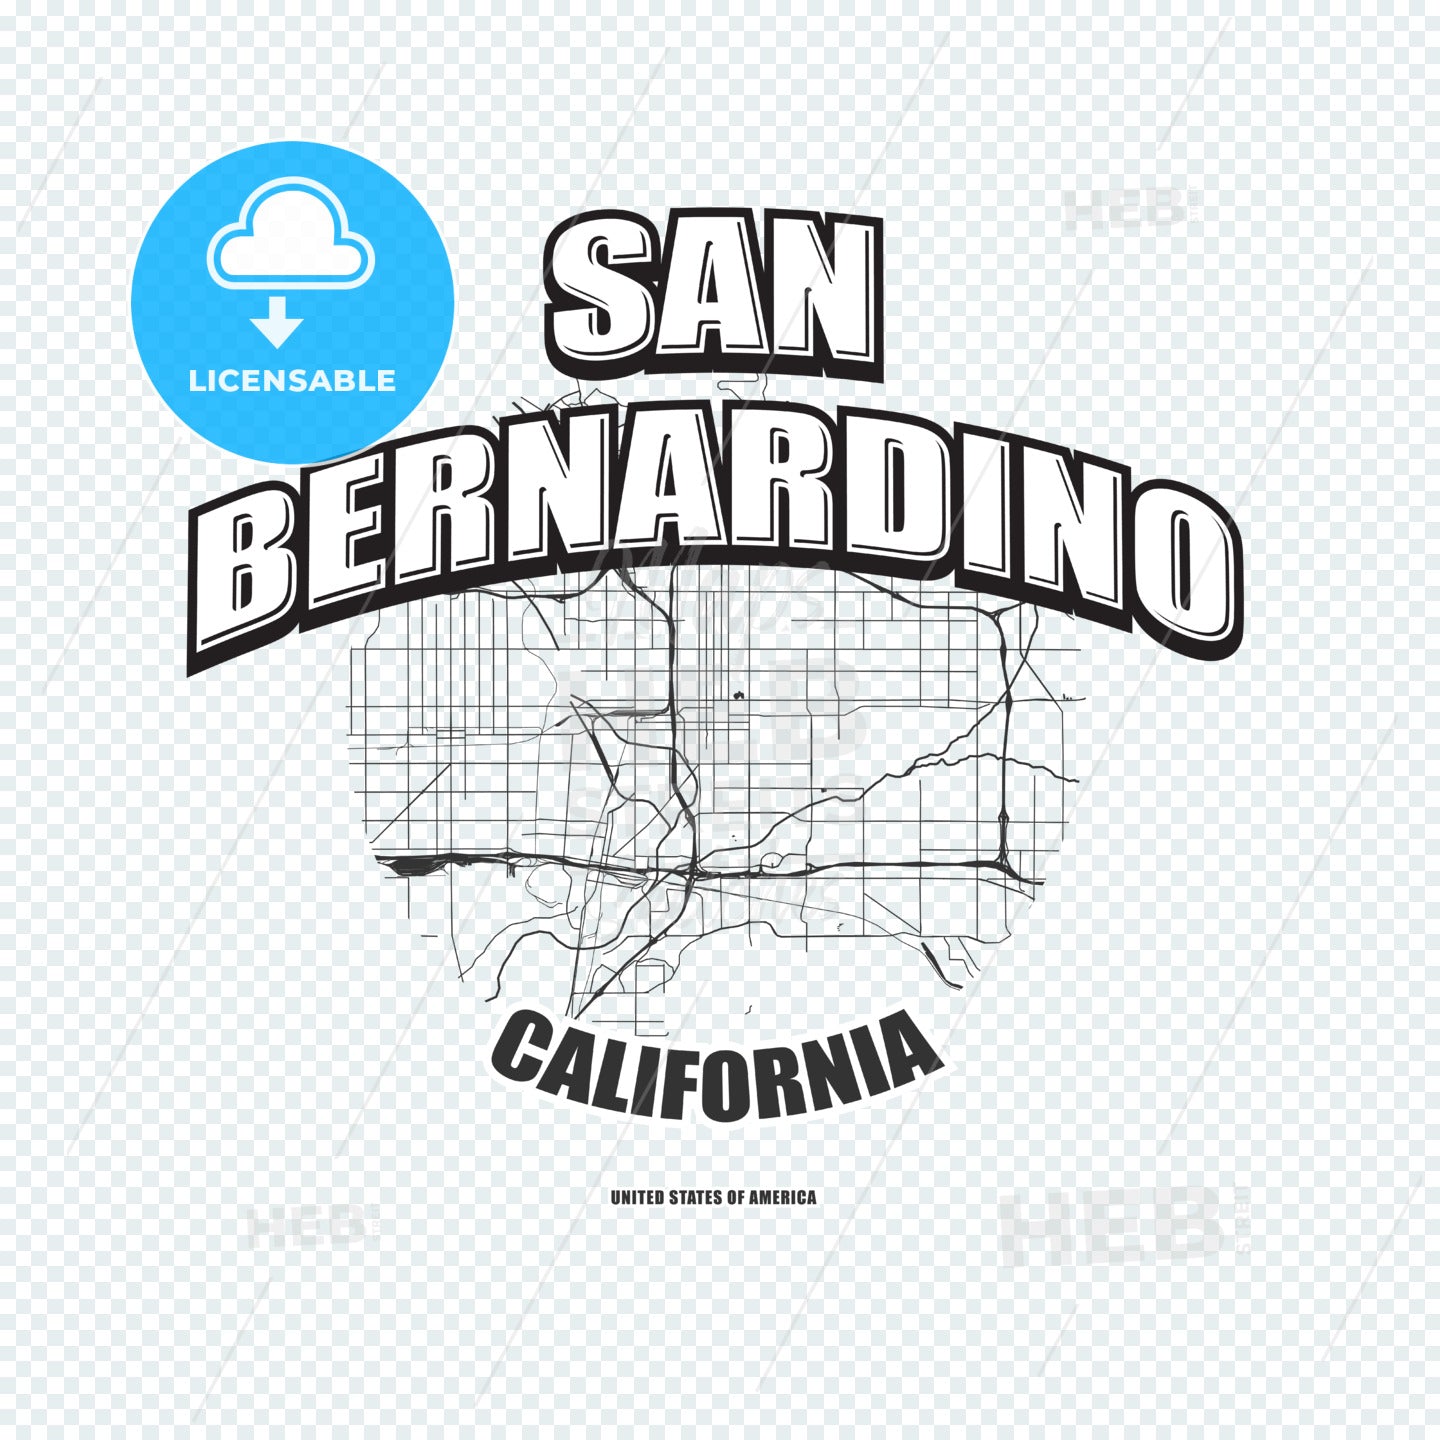 San Bernardino, California, logo artwork – instant download